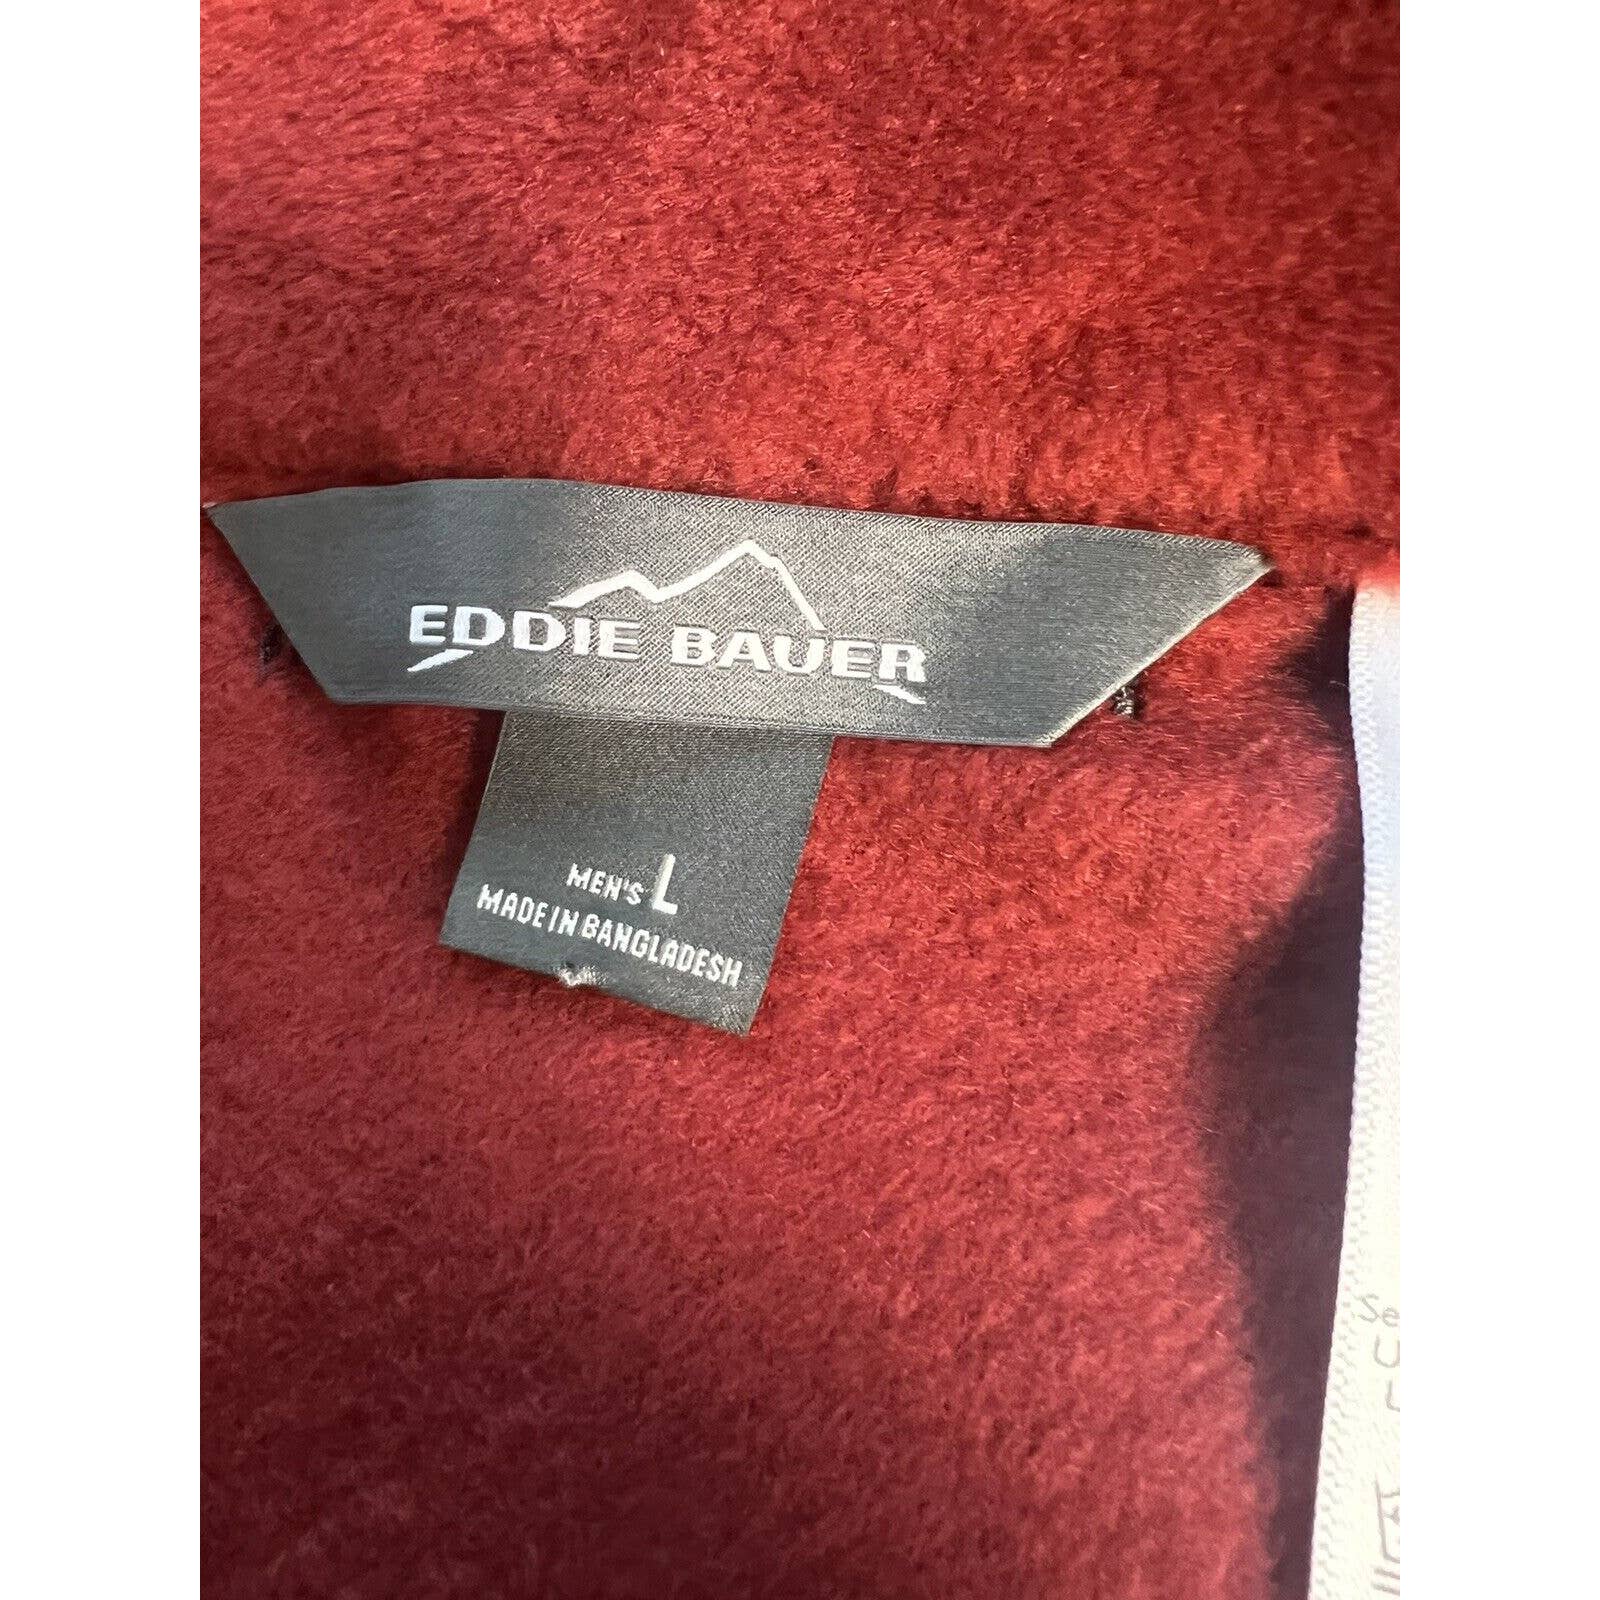 Eddie Bauer Quest 200 Fleece Vest Men’s Large Brick Red Color Polyester